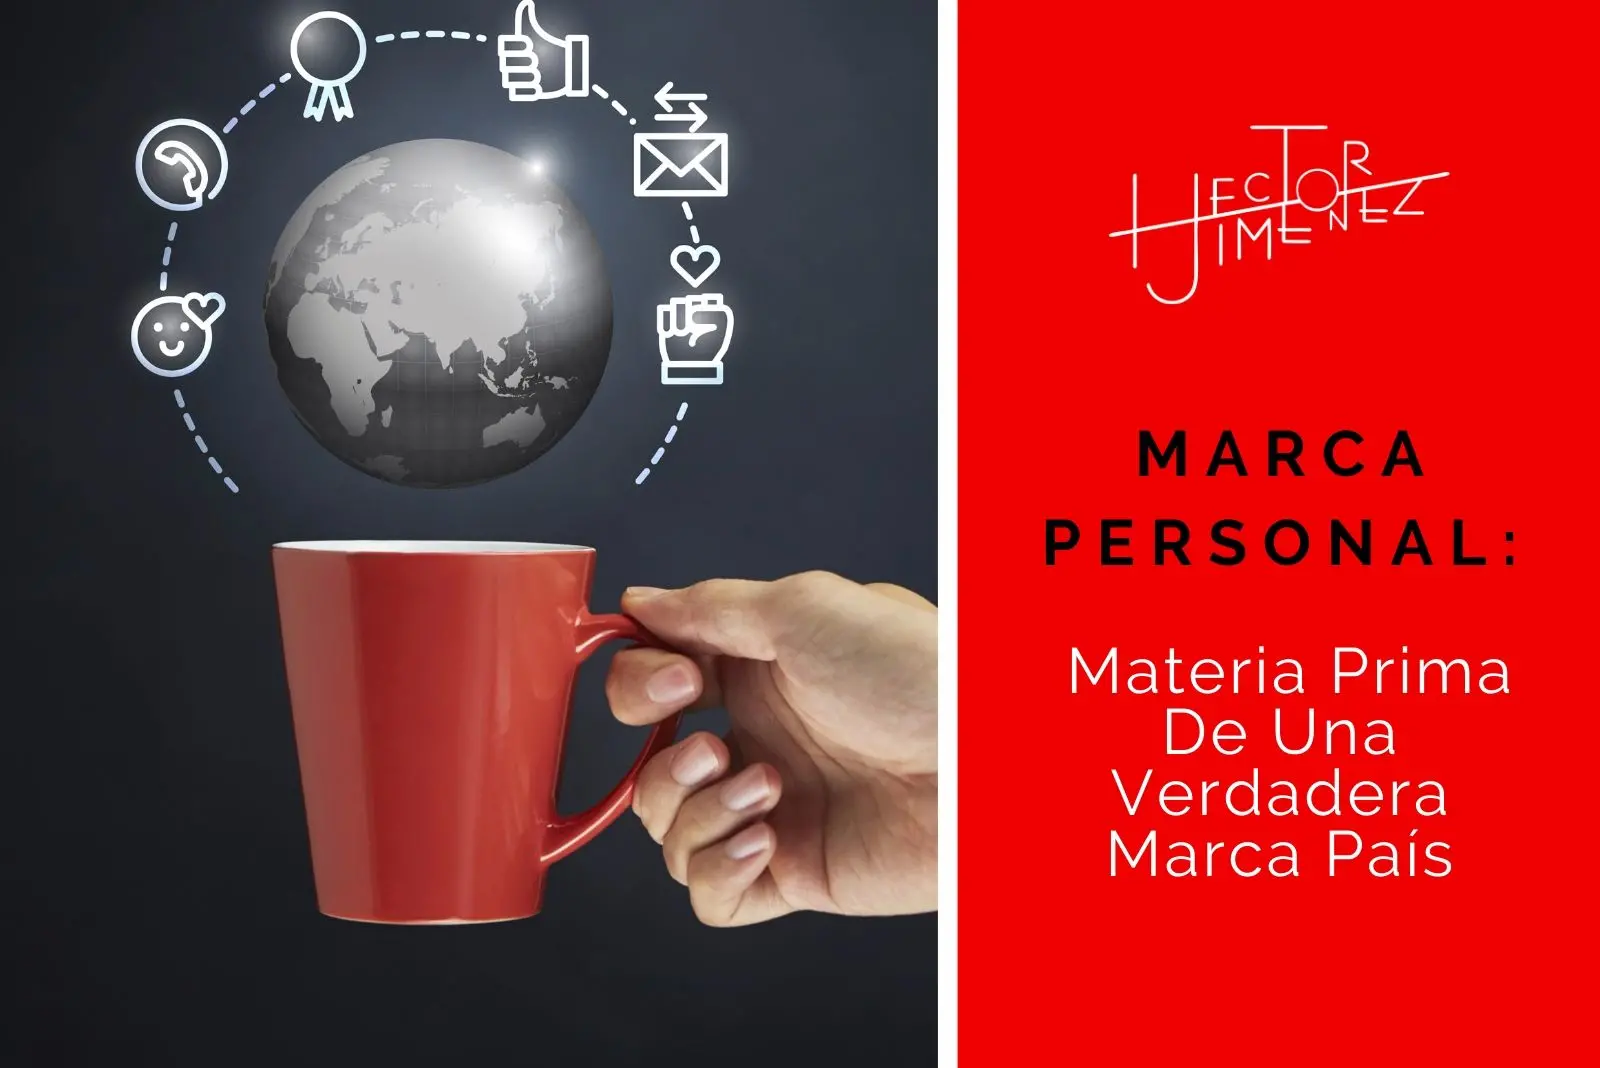 Hector-Jimenez-Marca-Personal_-Materia-Prima-De-Una-Verdadera-Marca-País